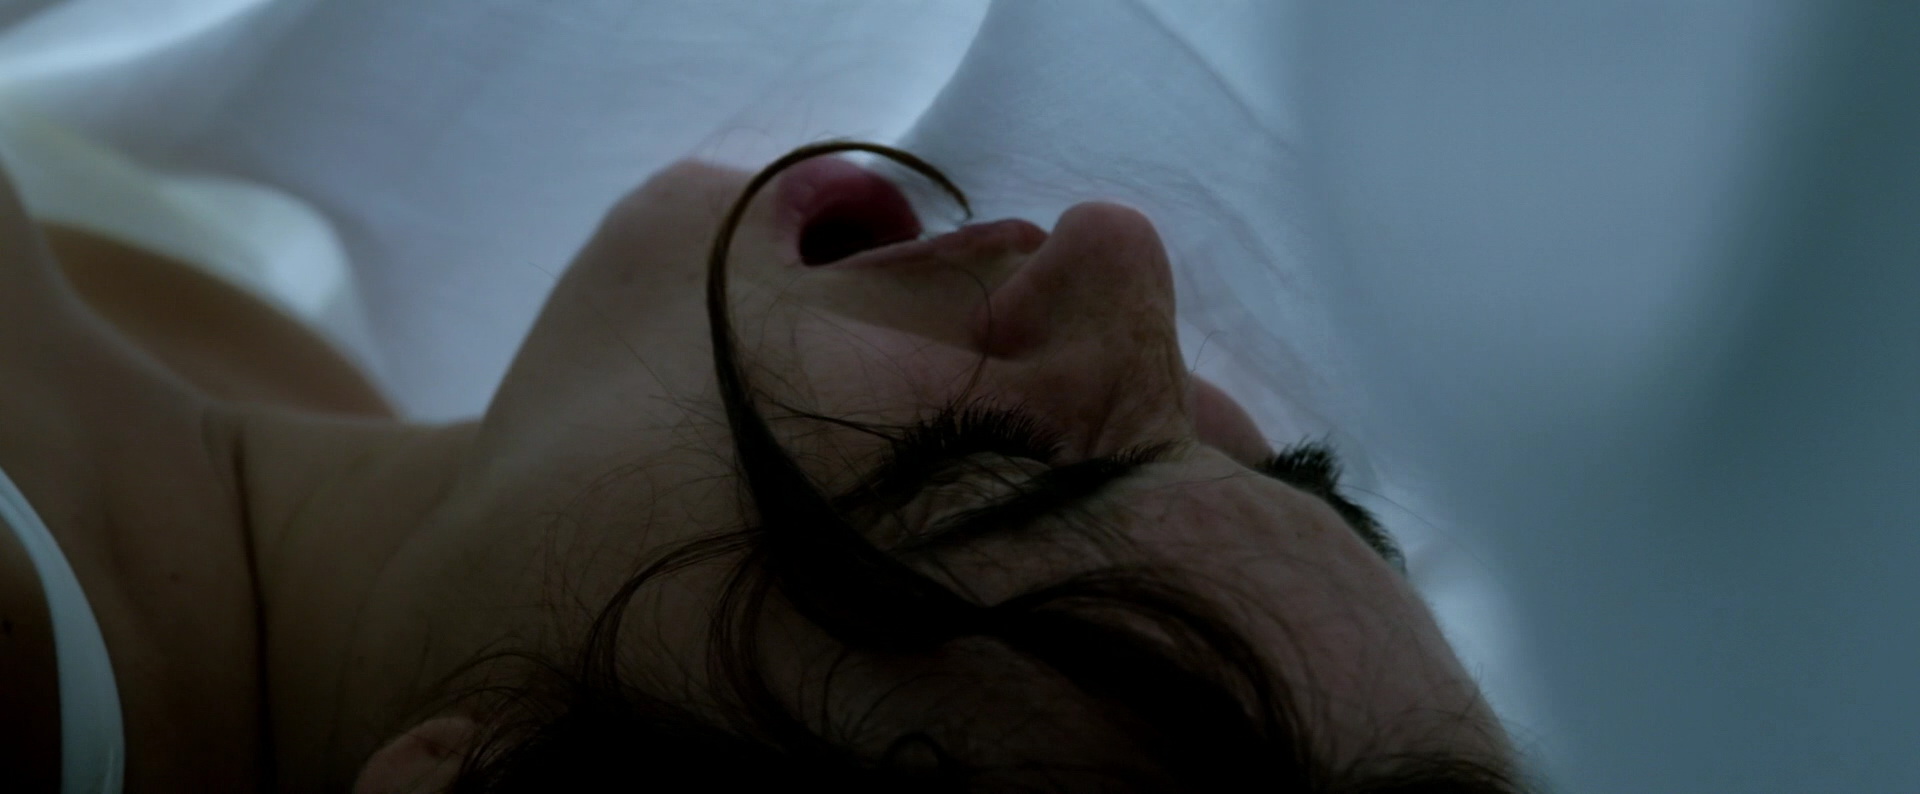 Penelope Cruz - The Counselor (2013) HD 1080p